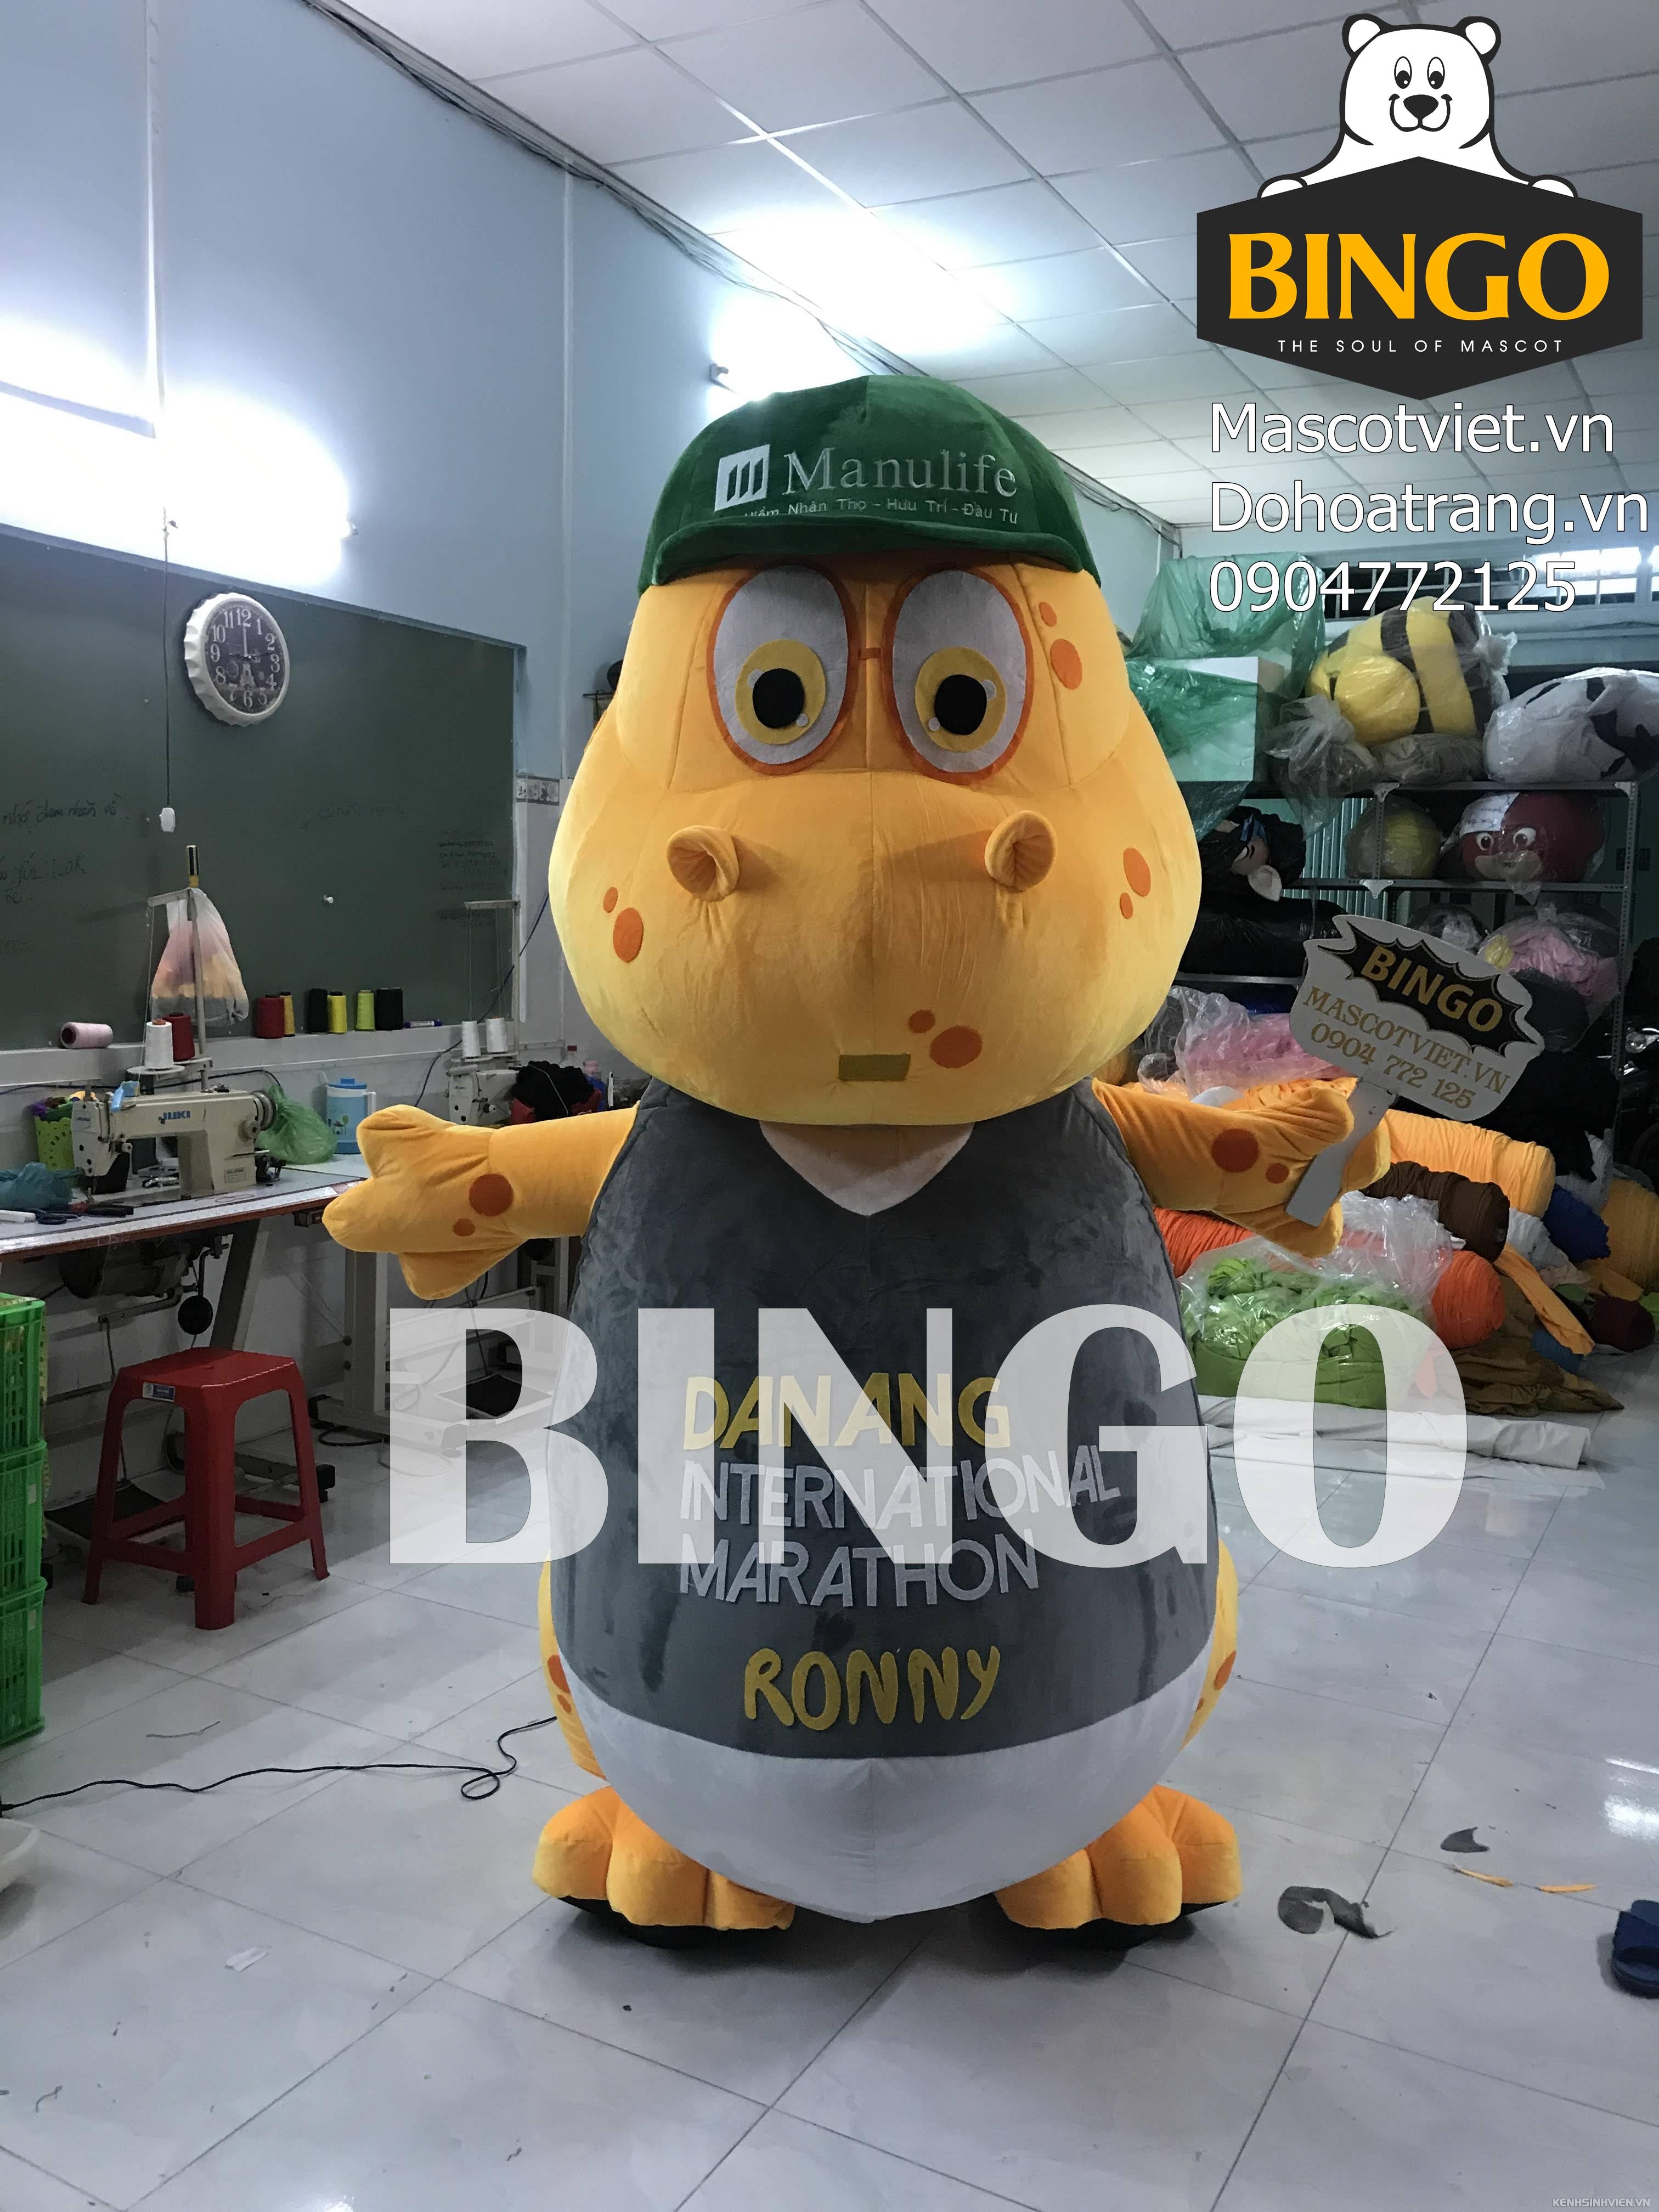 mascot-hoi-khung-long-bingo-costumes-0904772125-2-.jpg